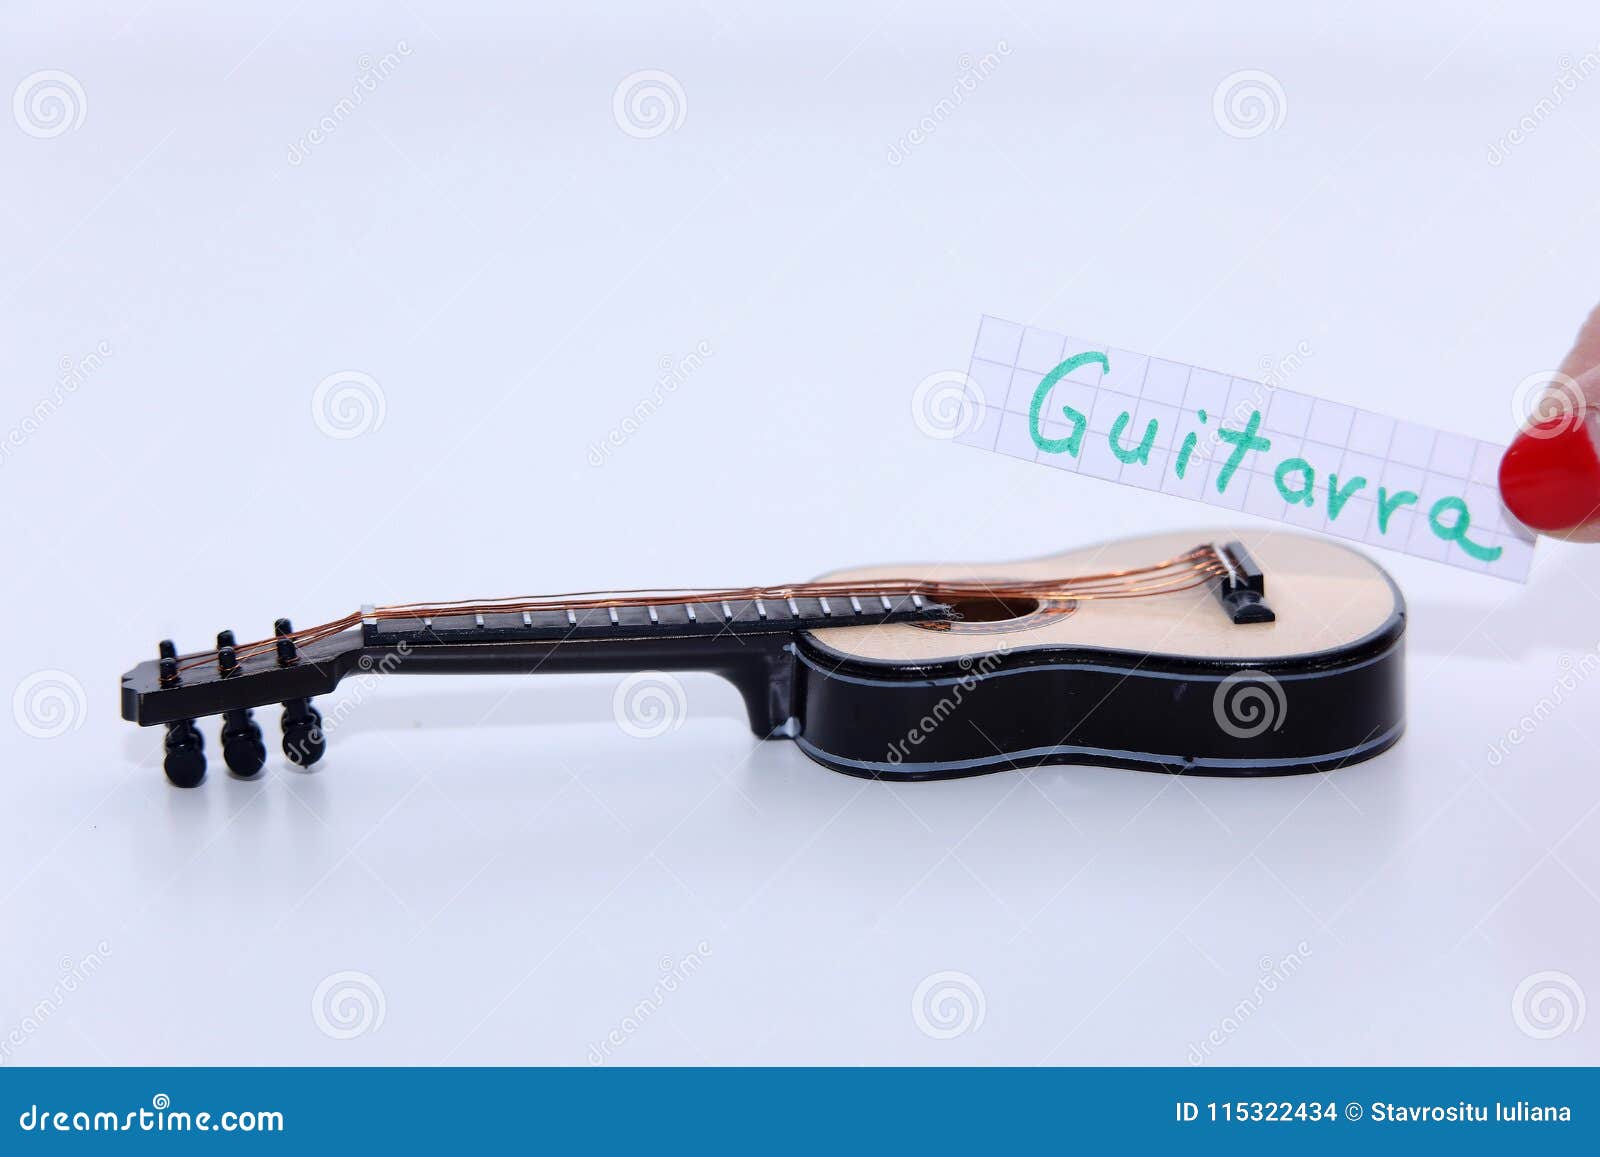 guitarra, spanish word for guitar in english